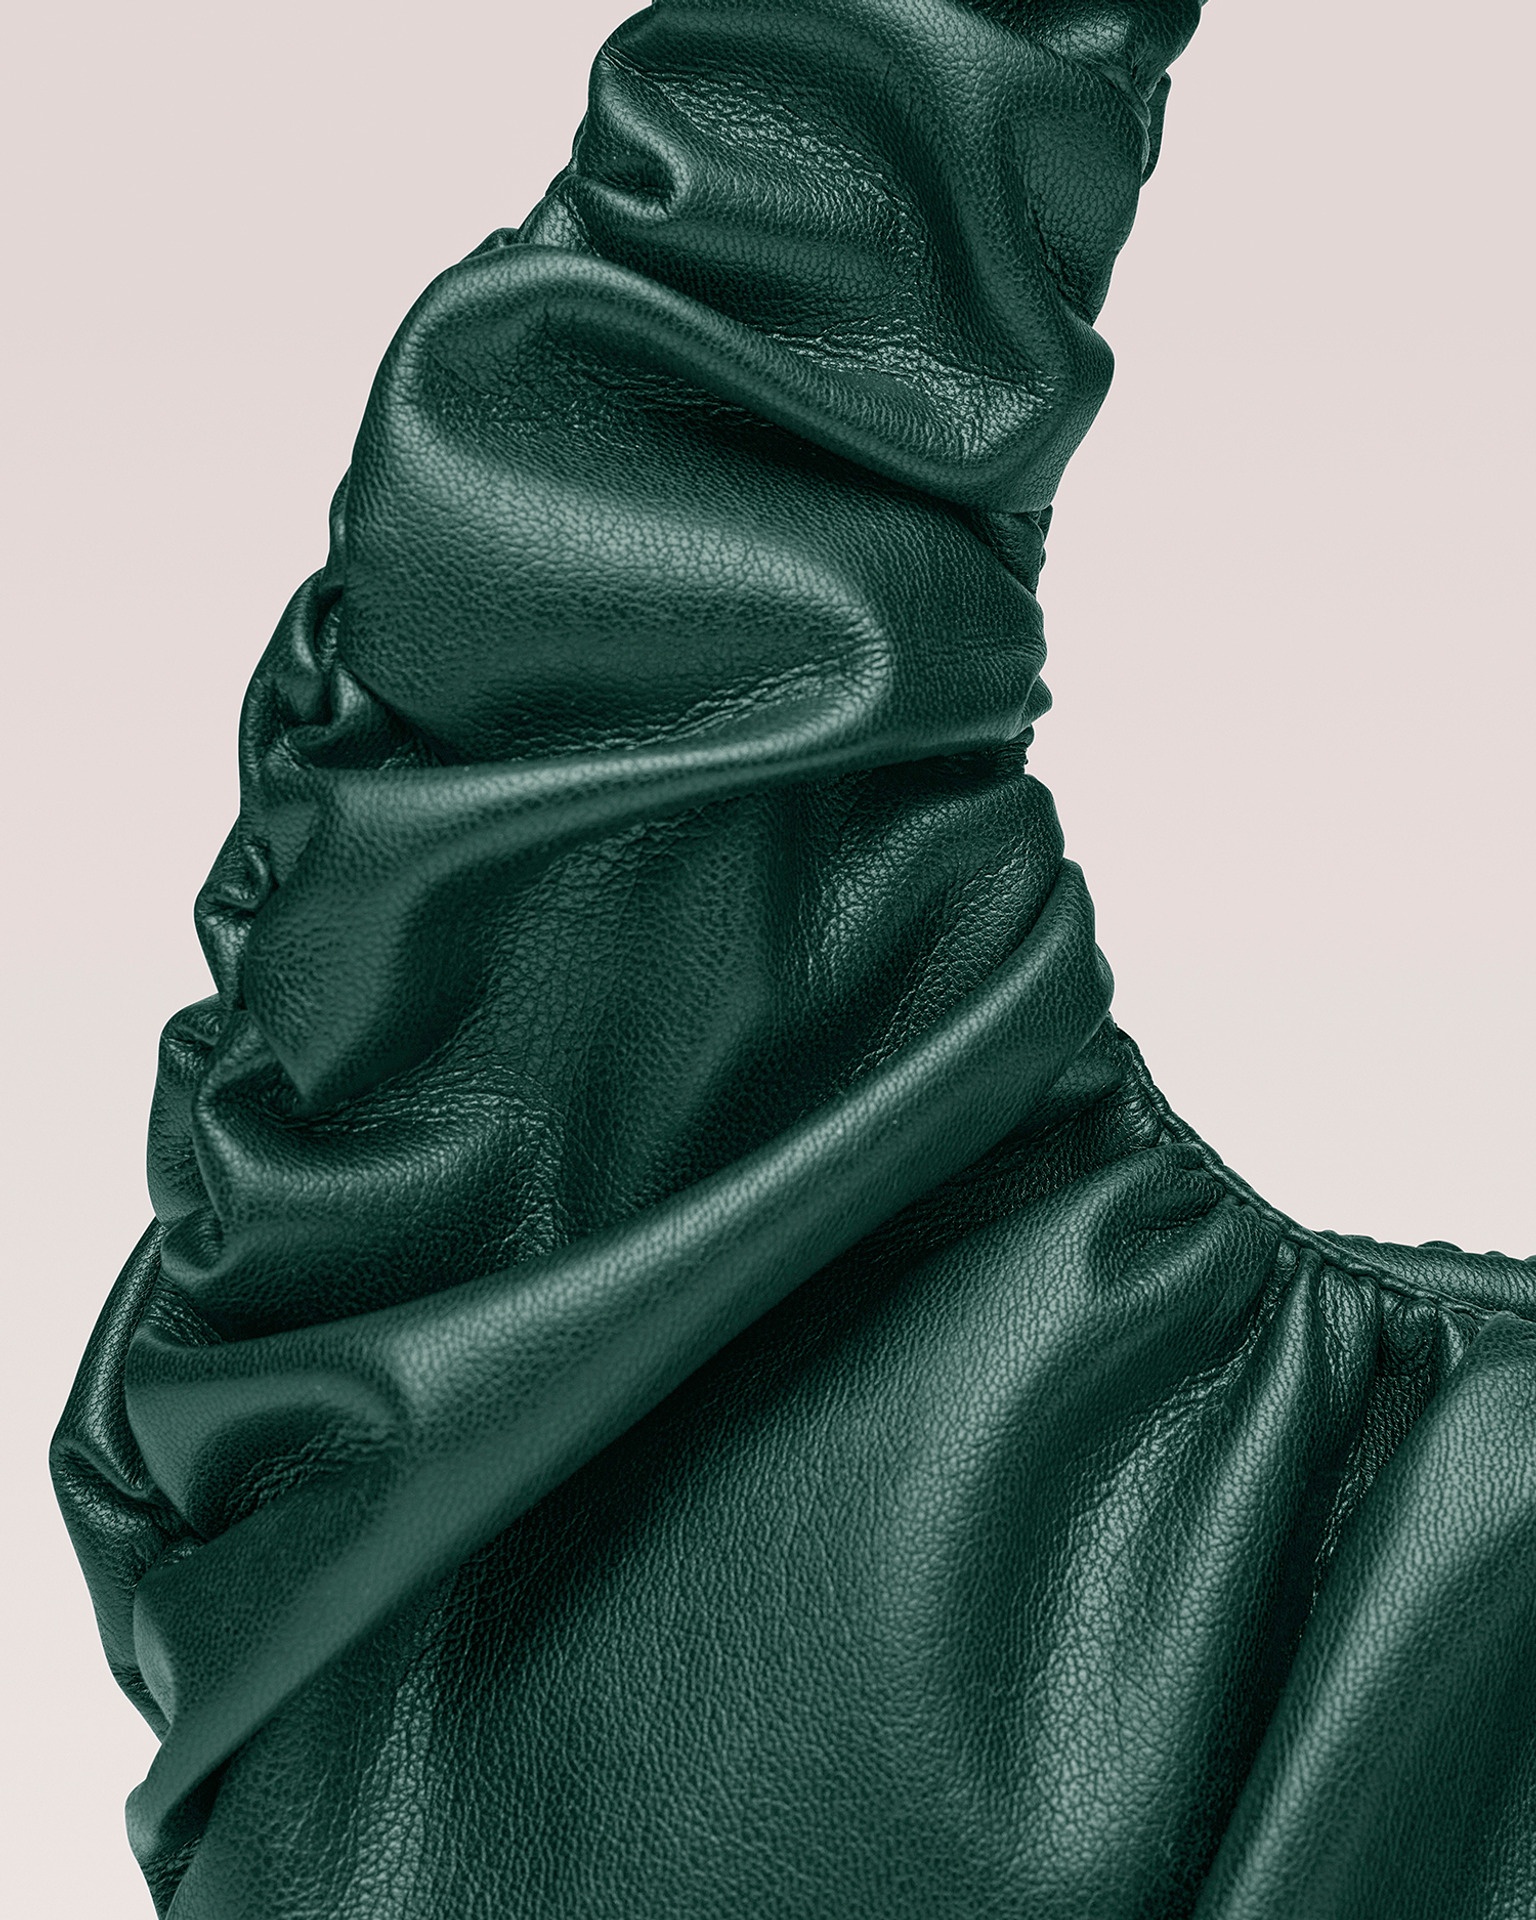 ANJA BAGUETTE - OKOBOR™ alt-leather gathered handbag - Pine green - 2